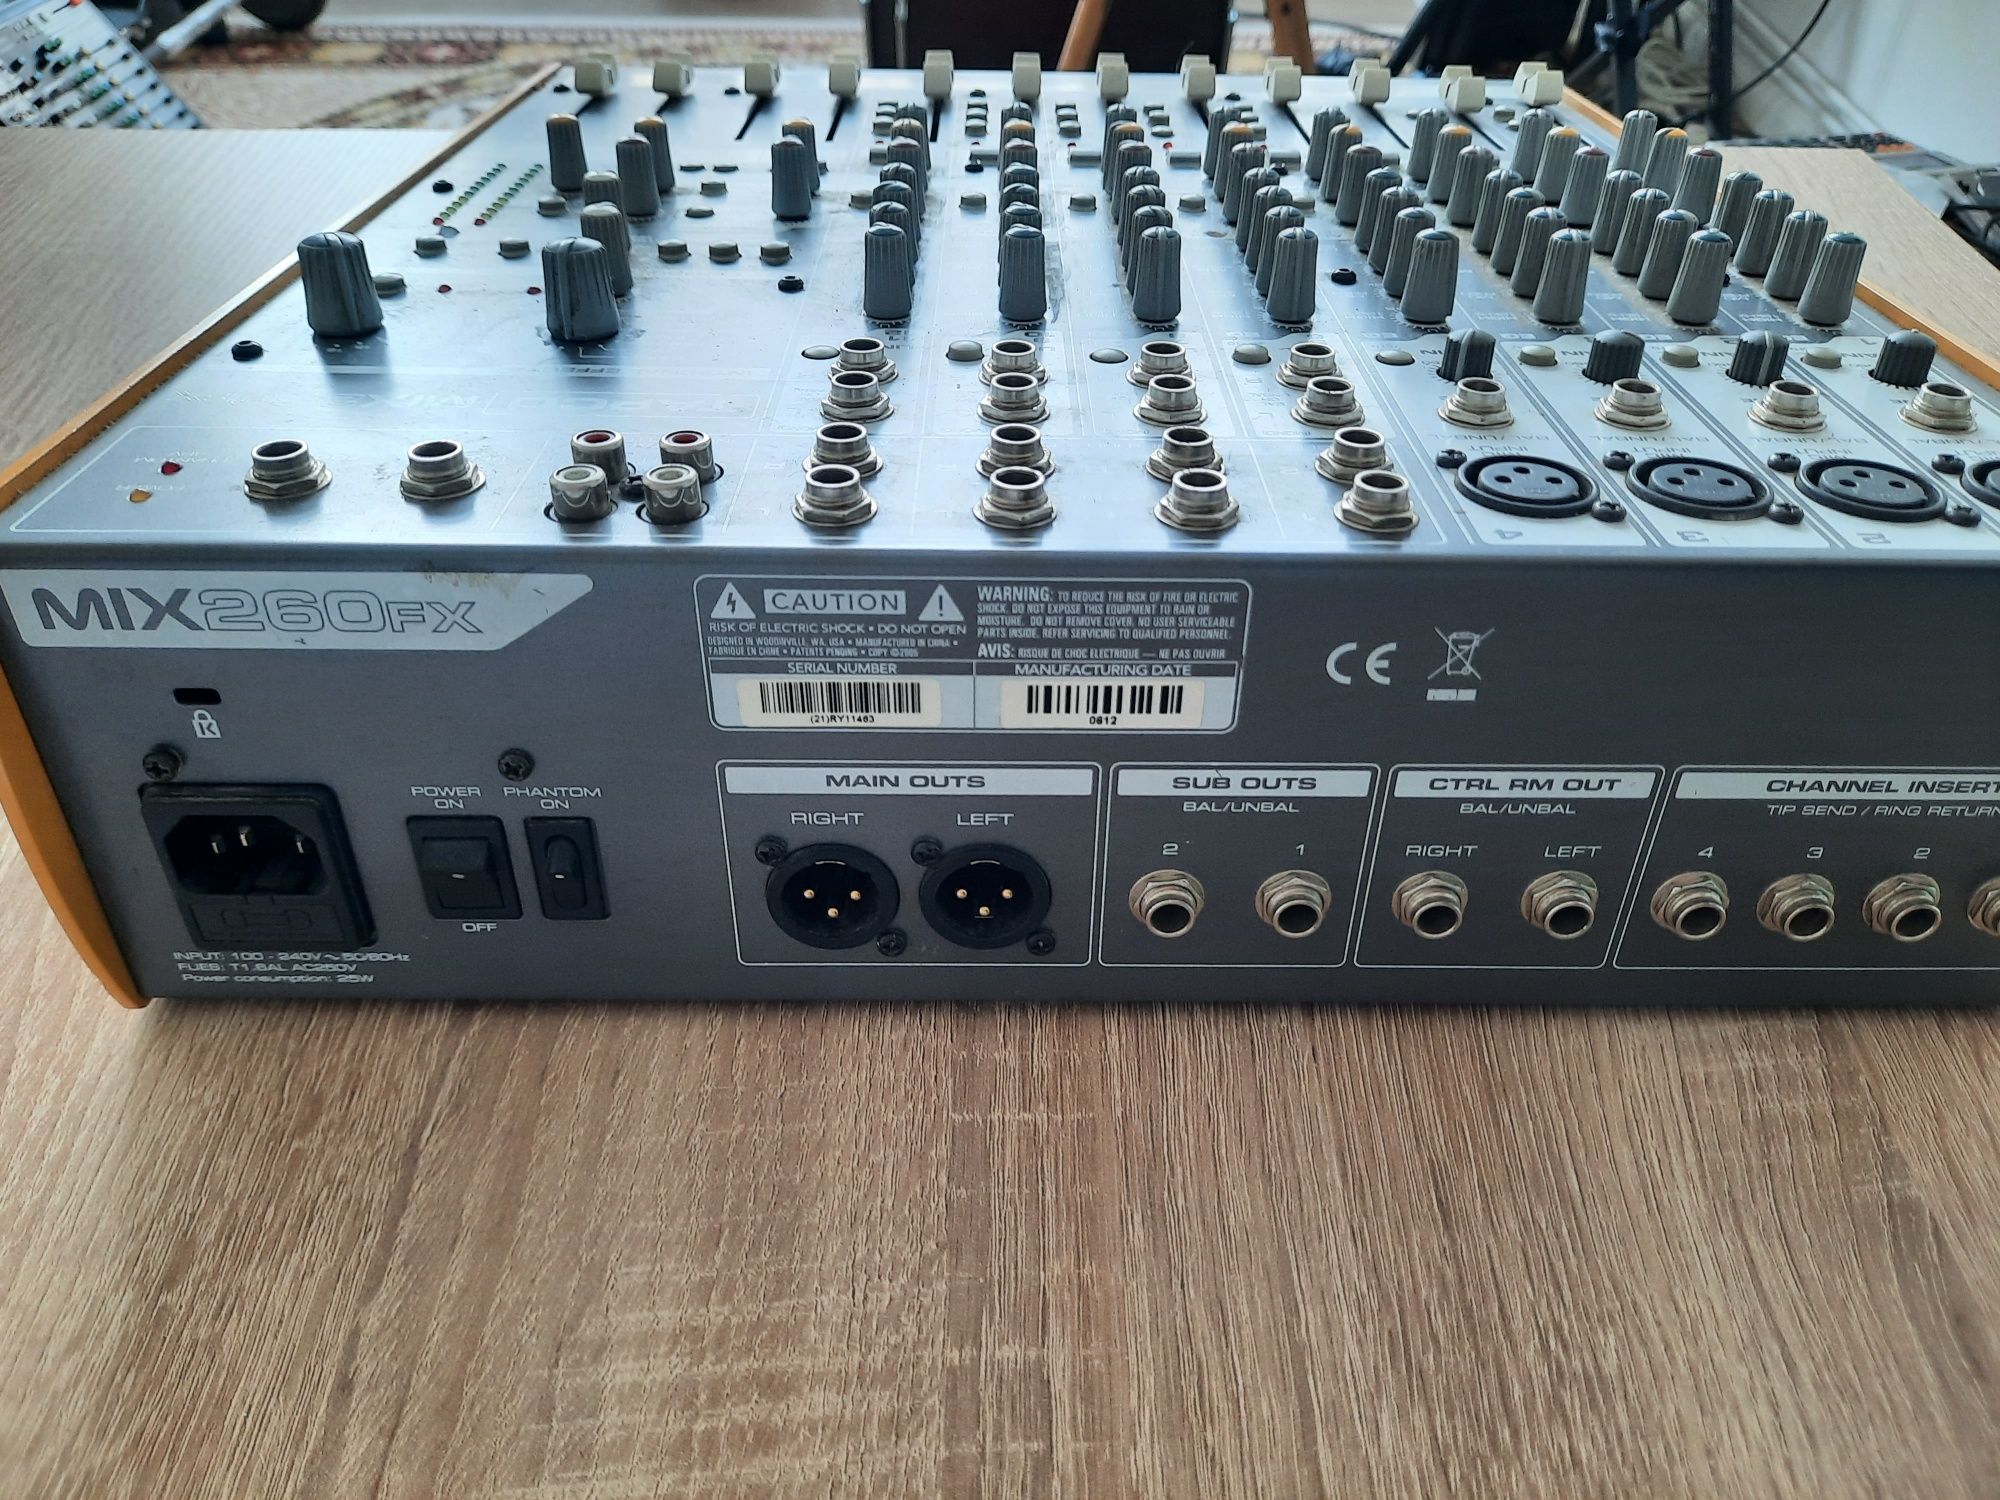 Mixer dynacord mcx24.2,amplificator omnitronic p1000,mac audio,tapco m